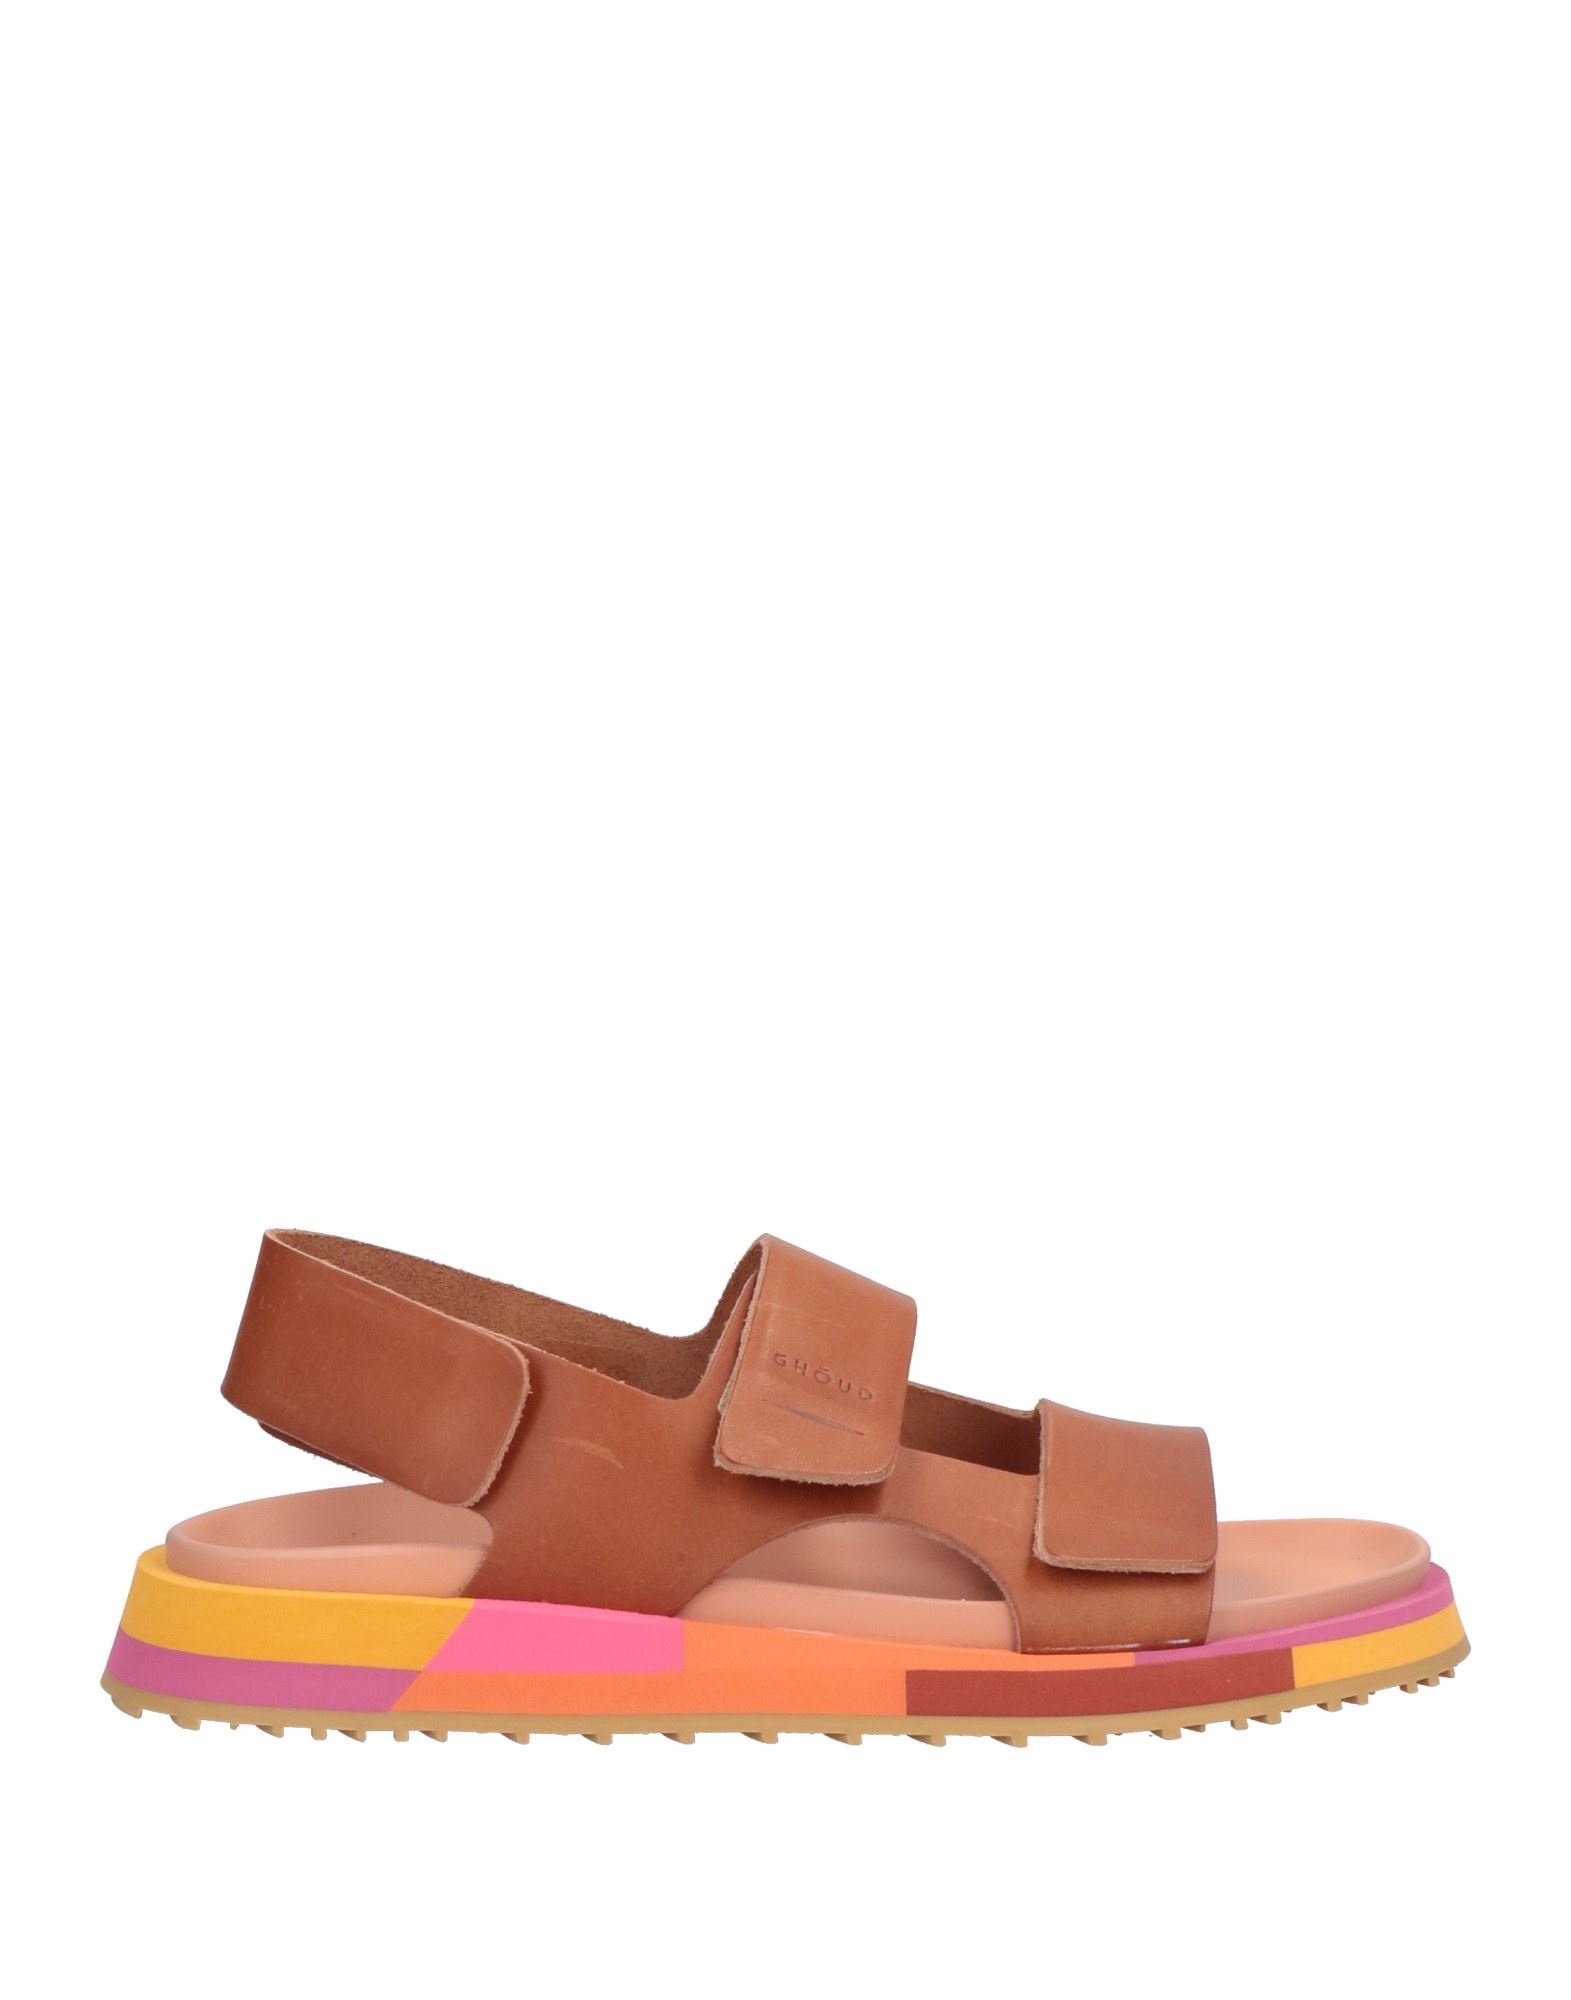 Ghoud Venice Sandals In Brown